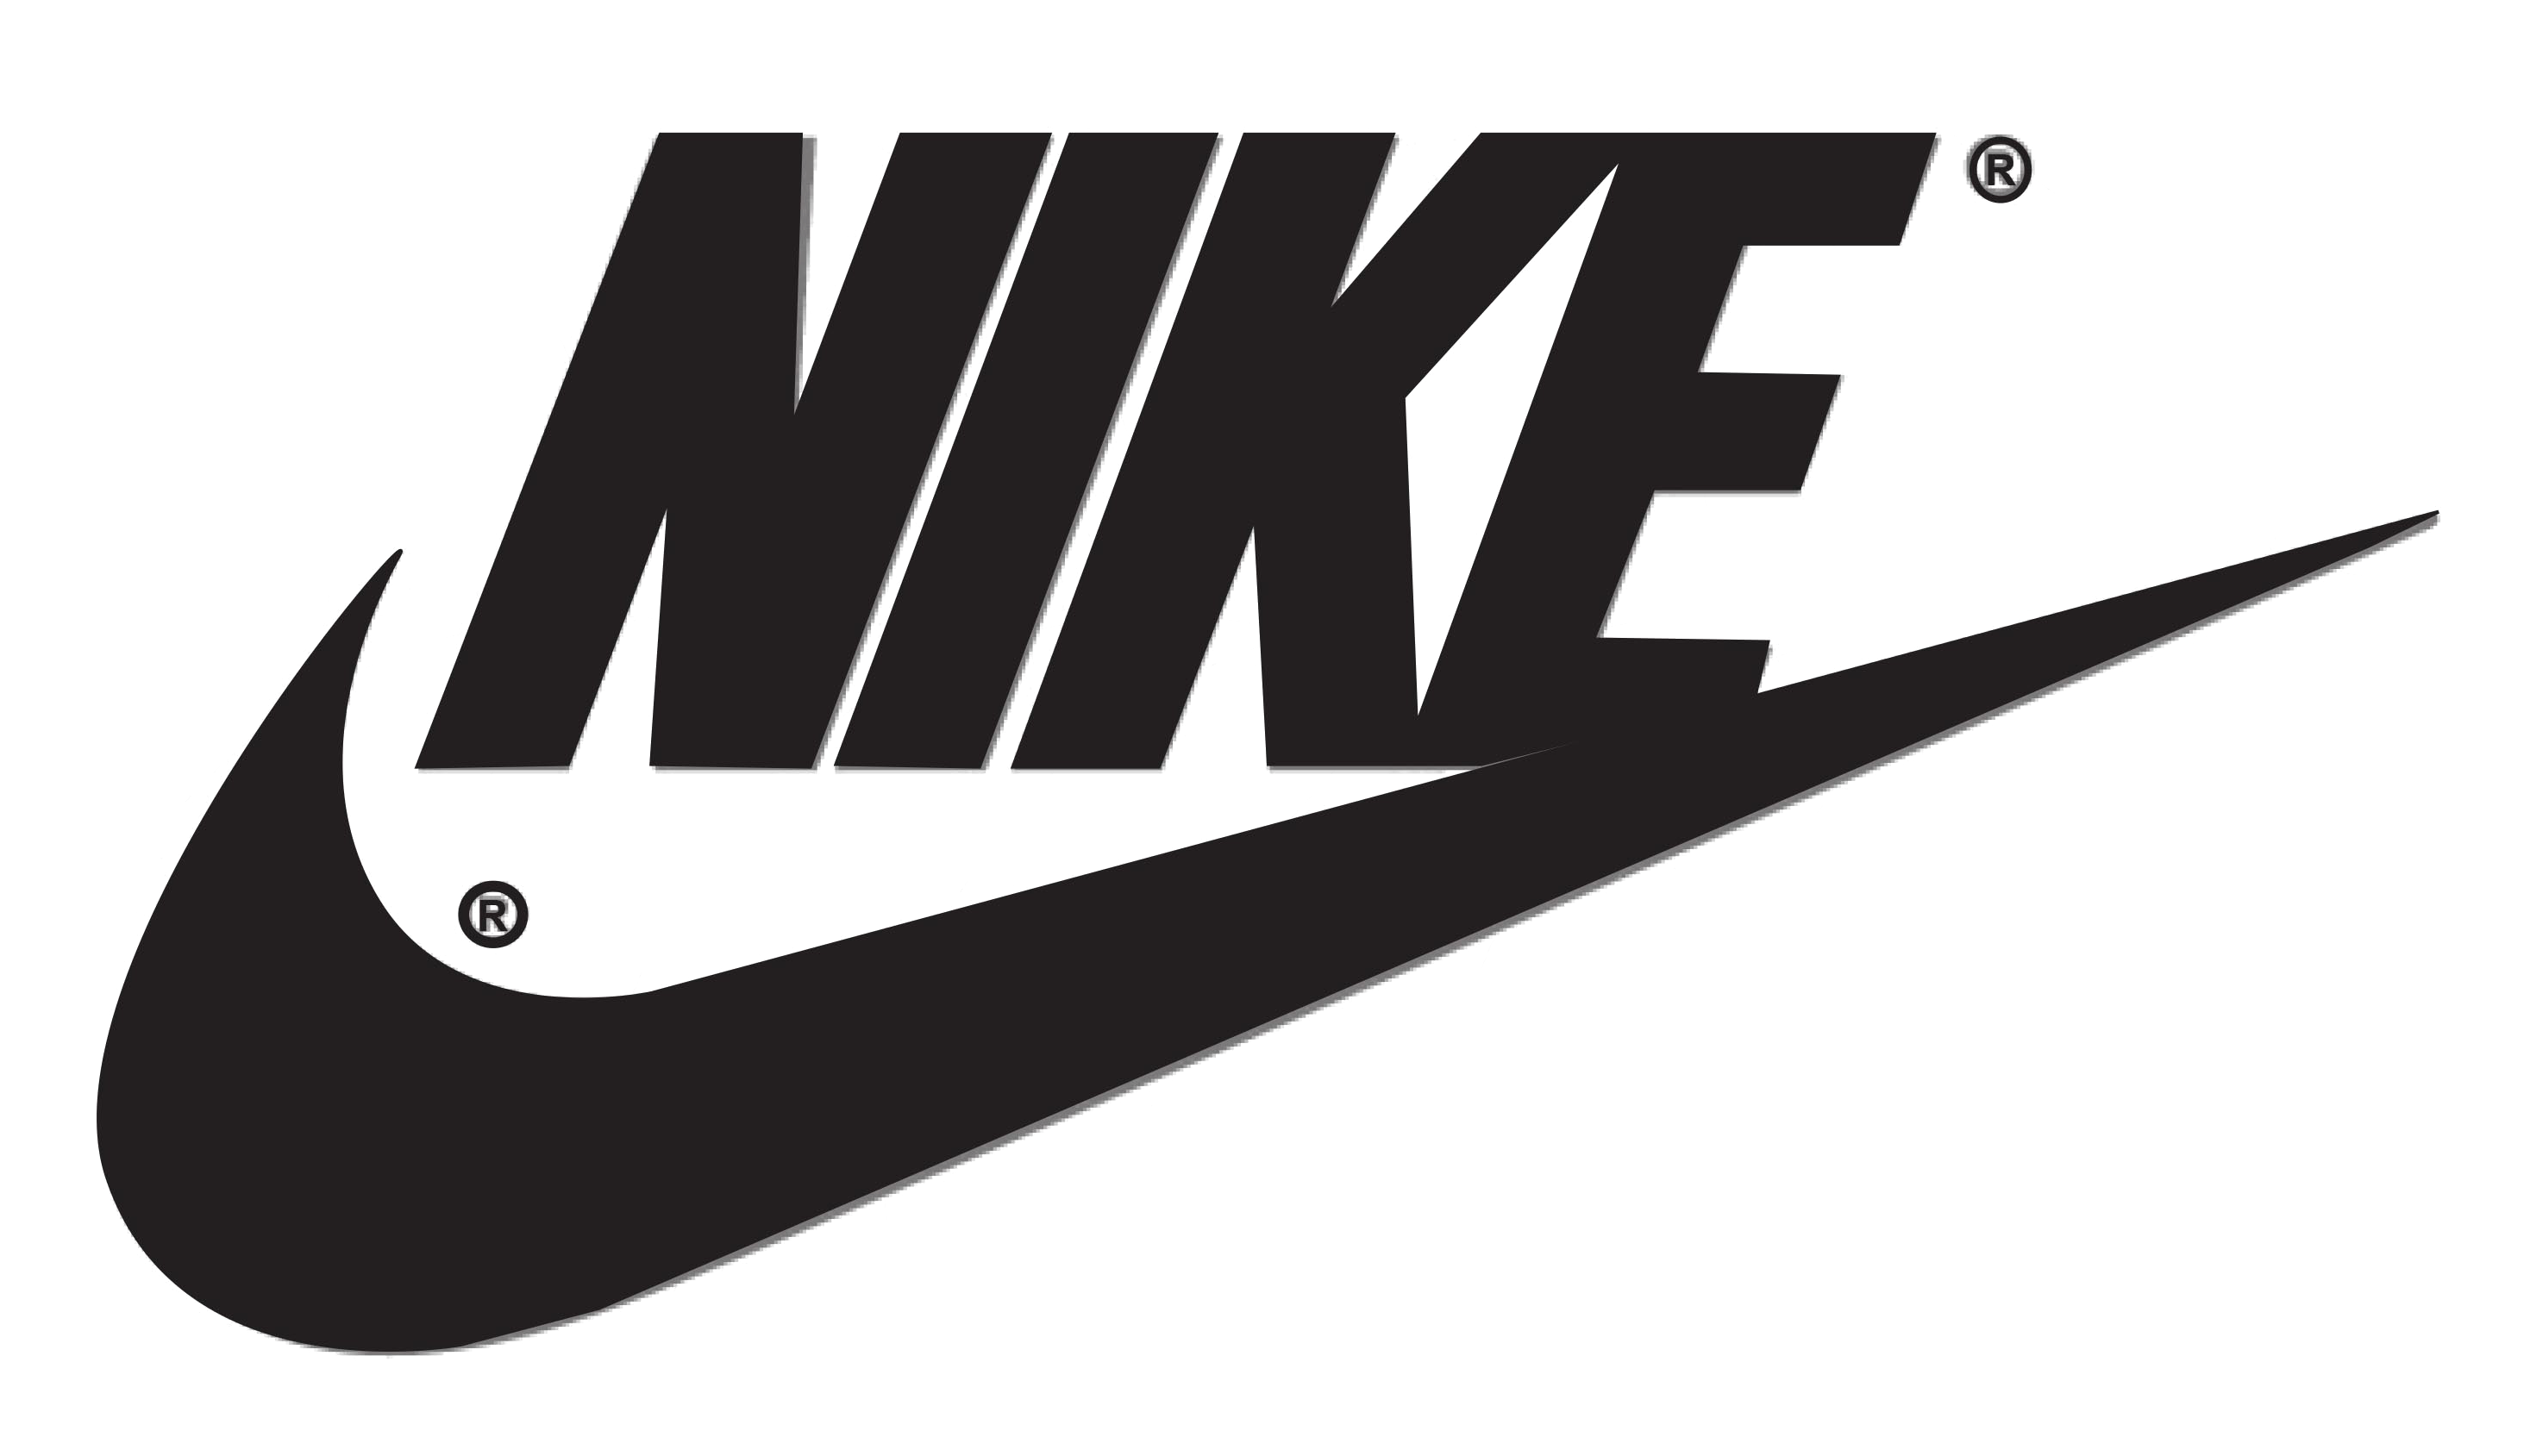 Nike Png Images Transparent Free Download